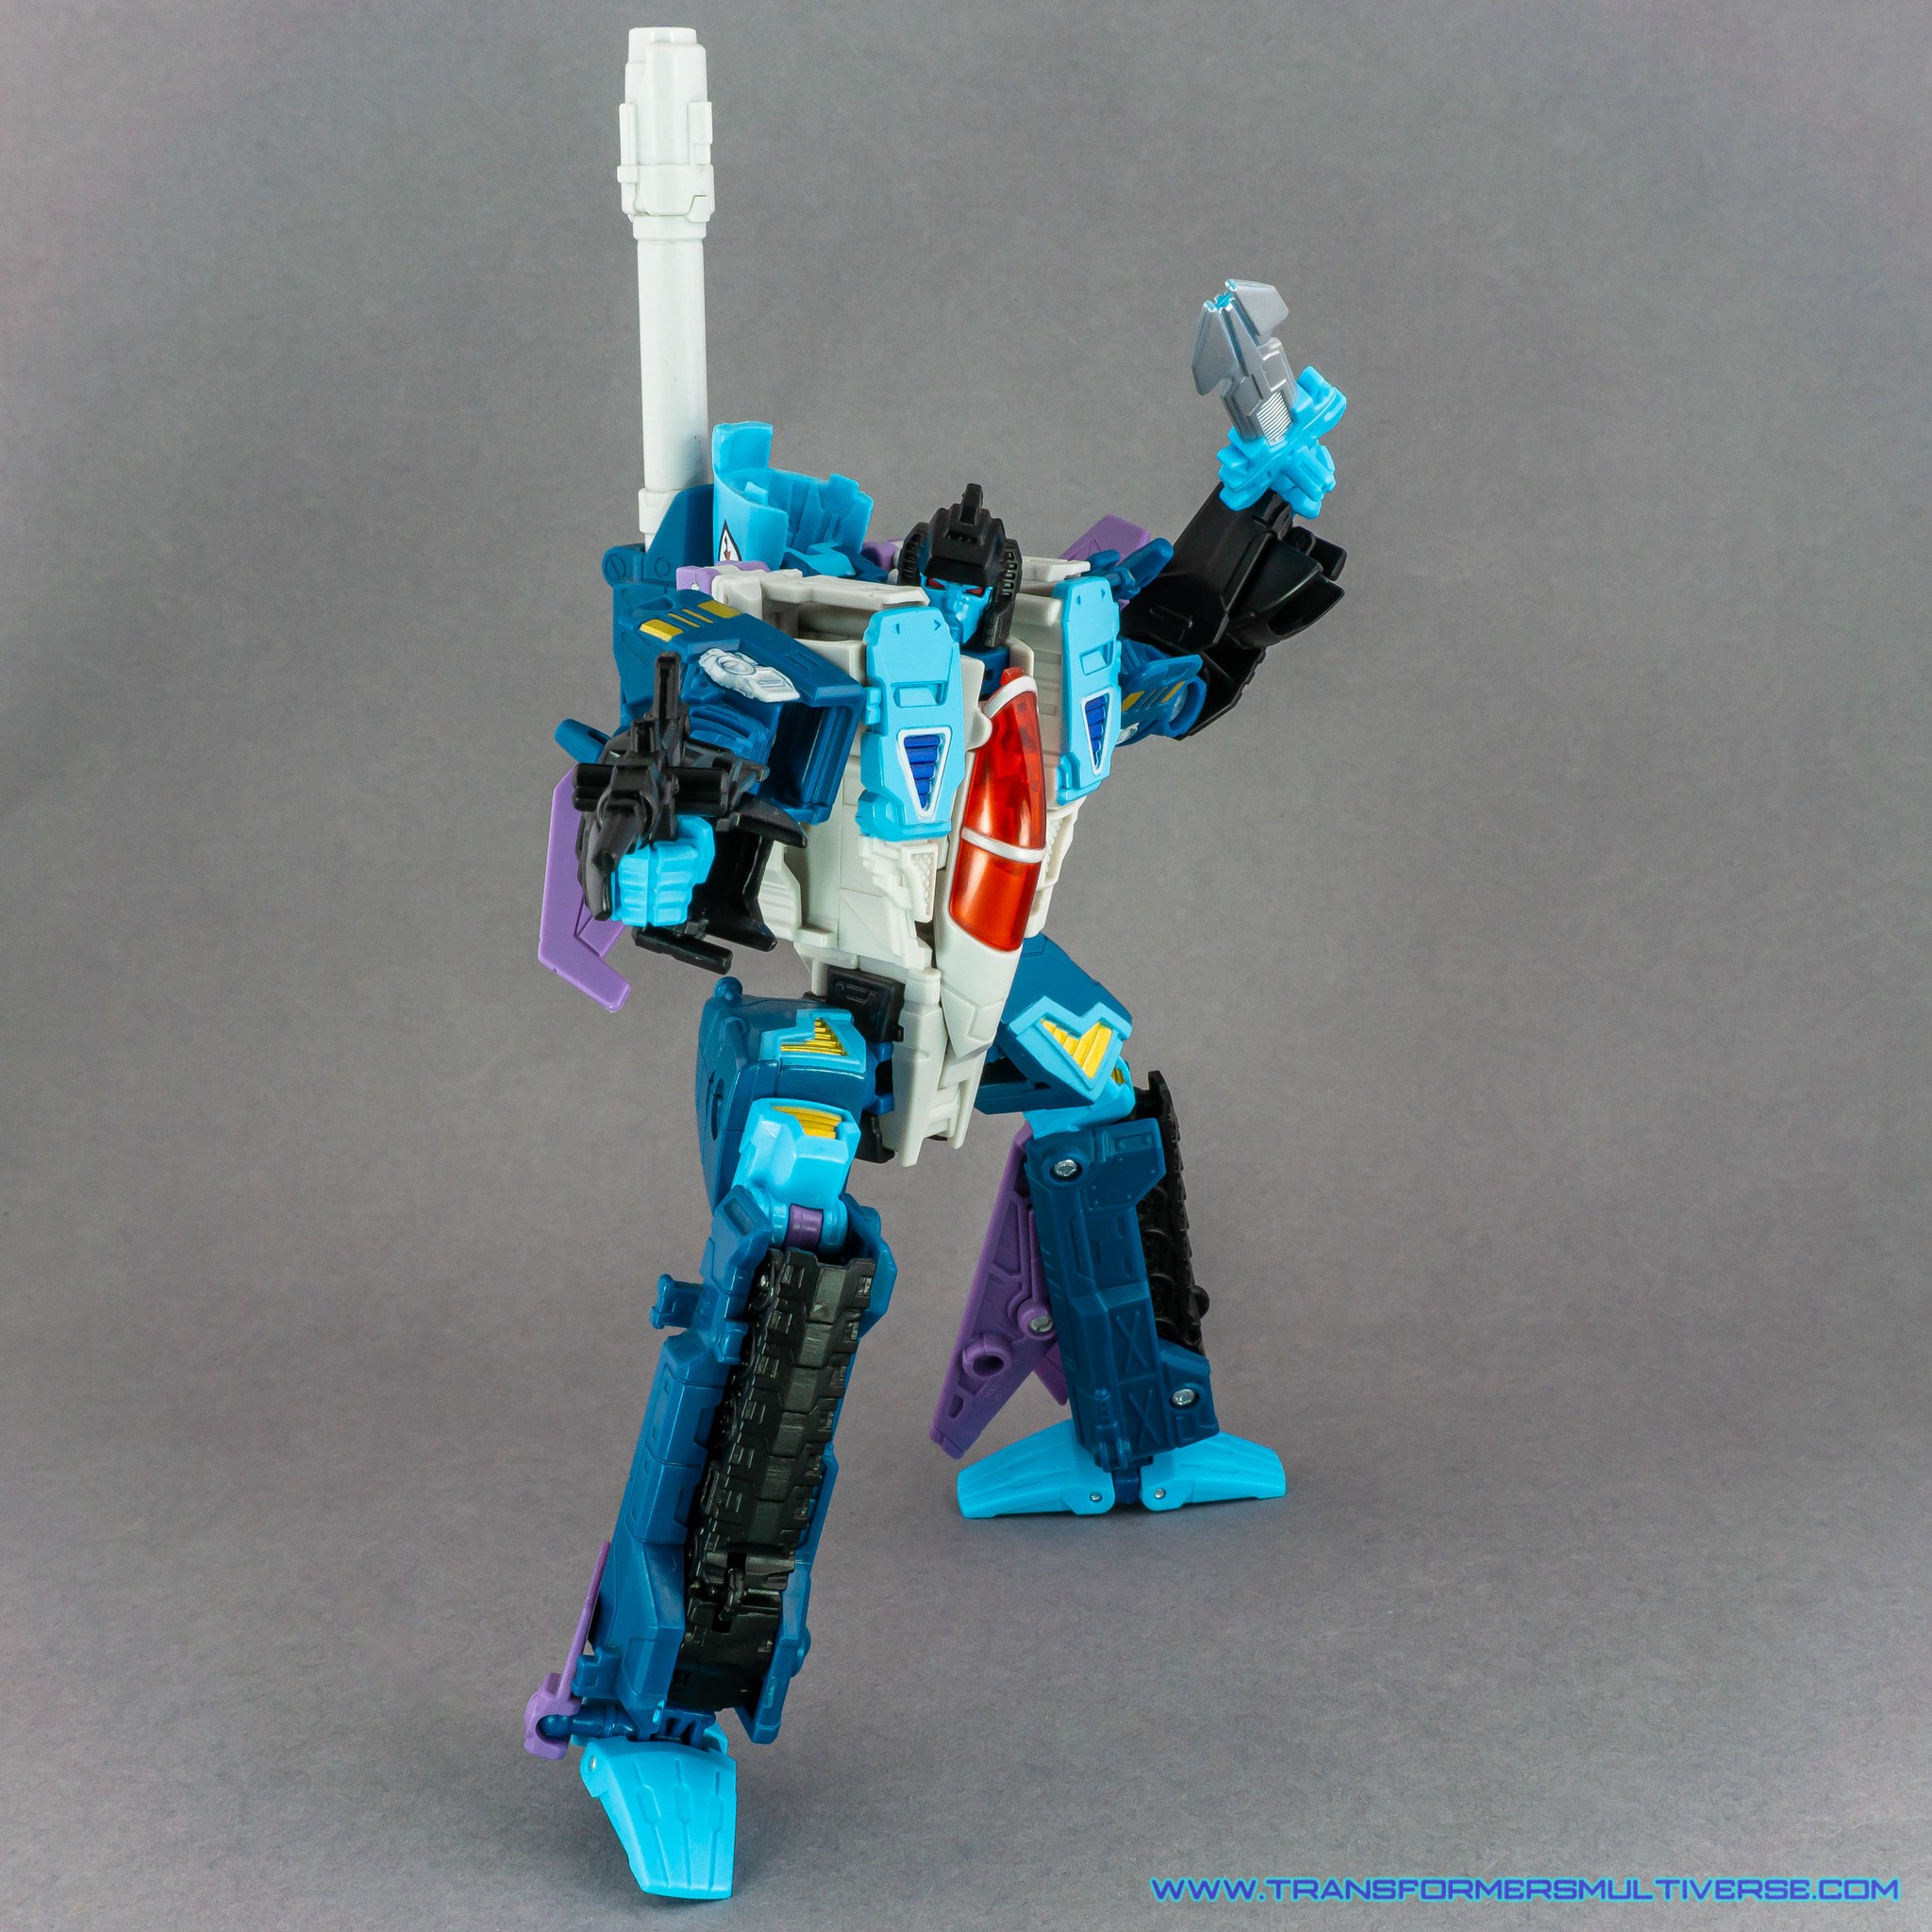 Transformers Generations Doubledealer robot mode, posed, alternate angle